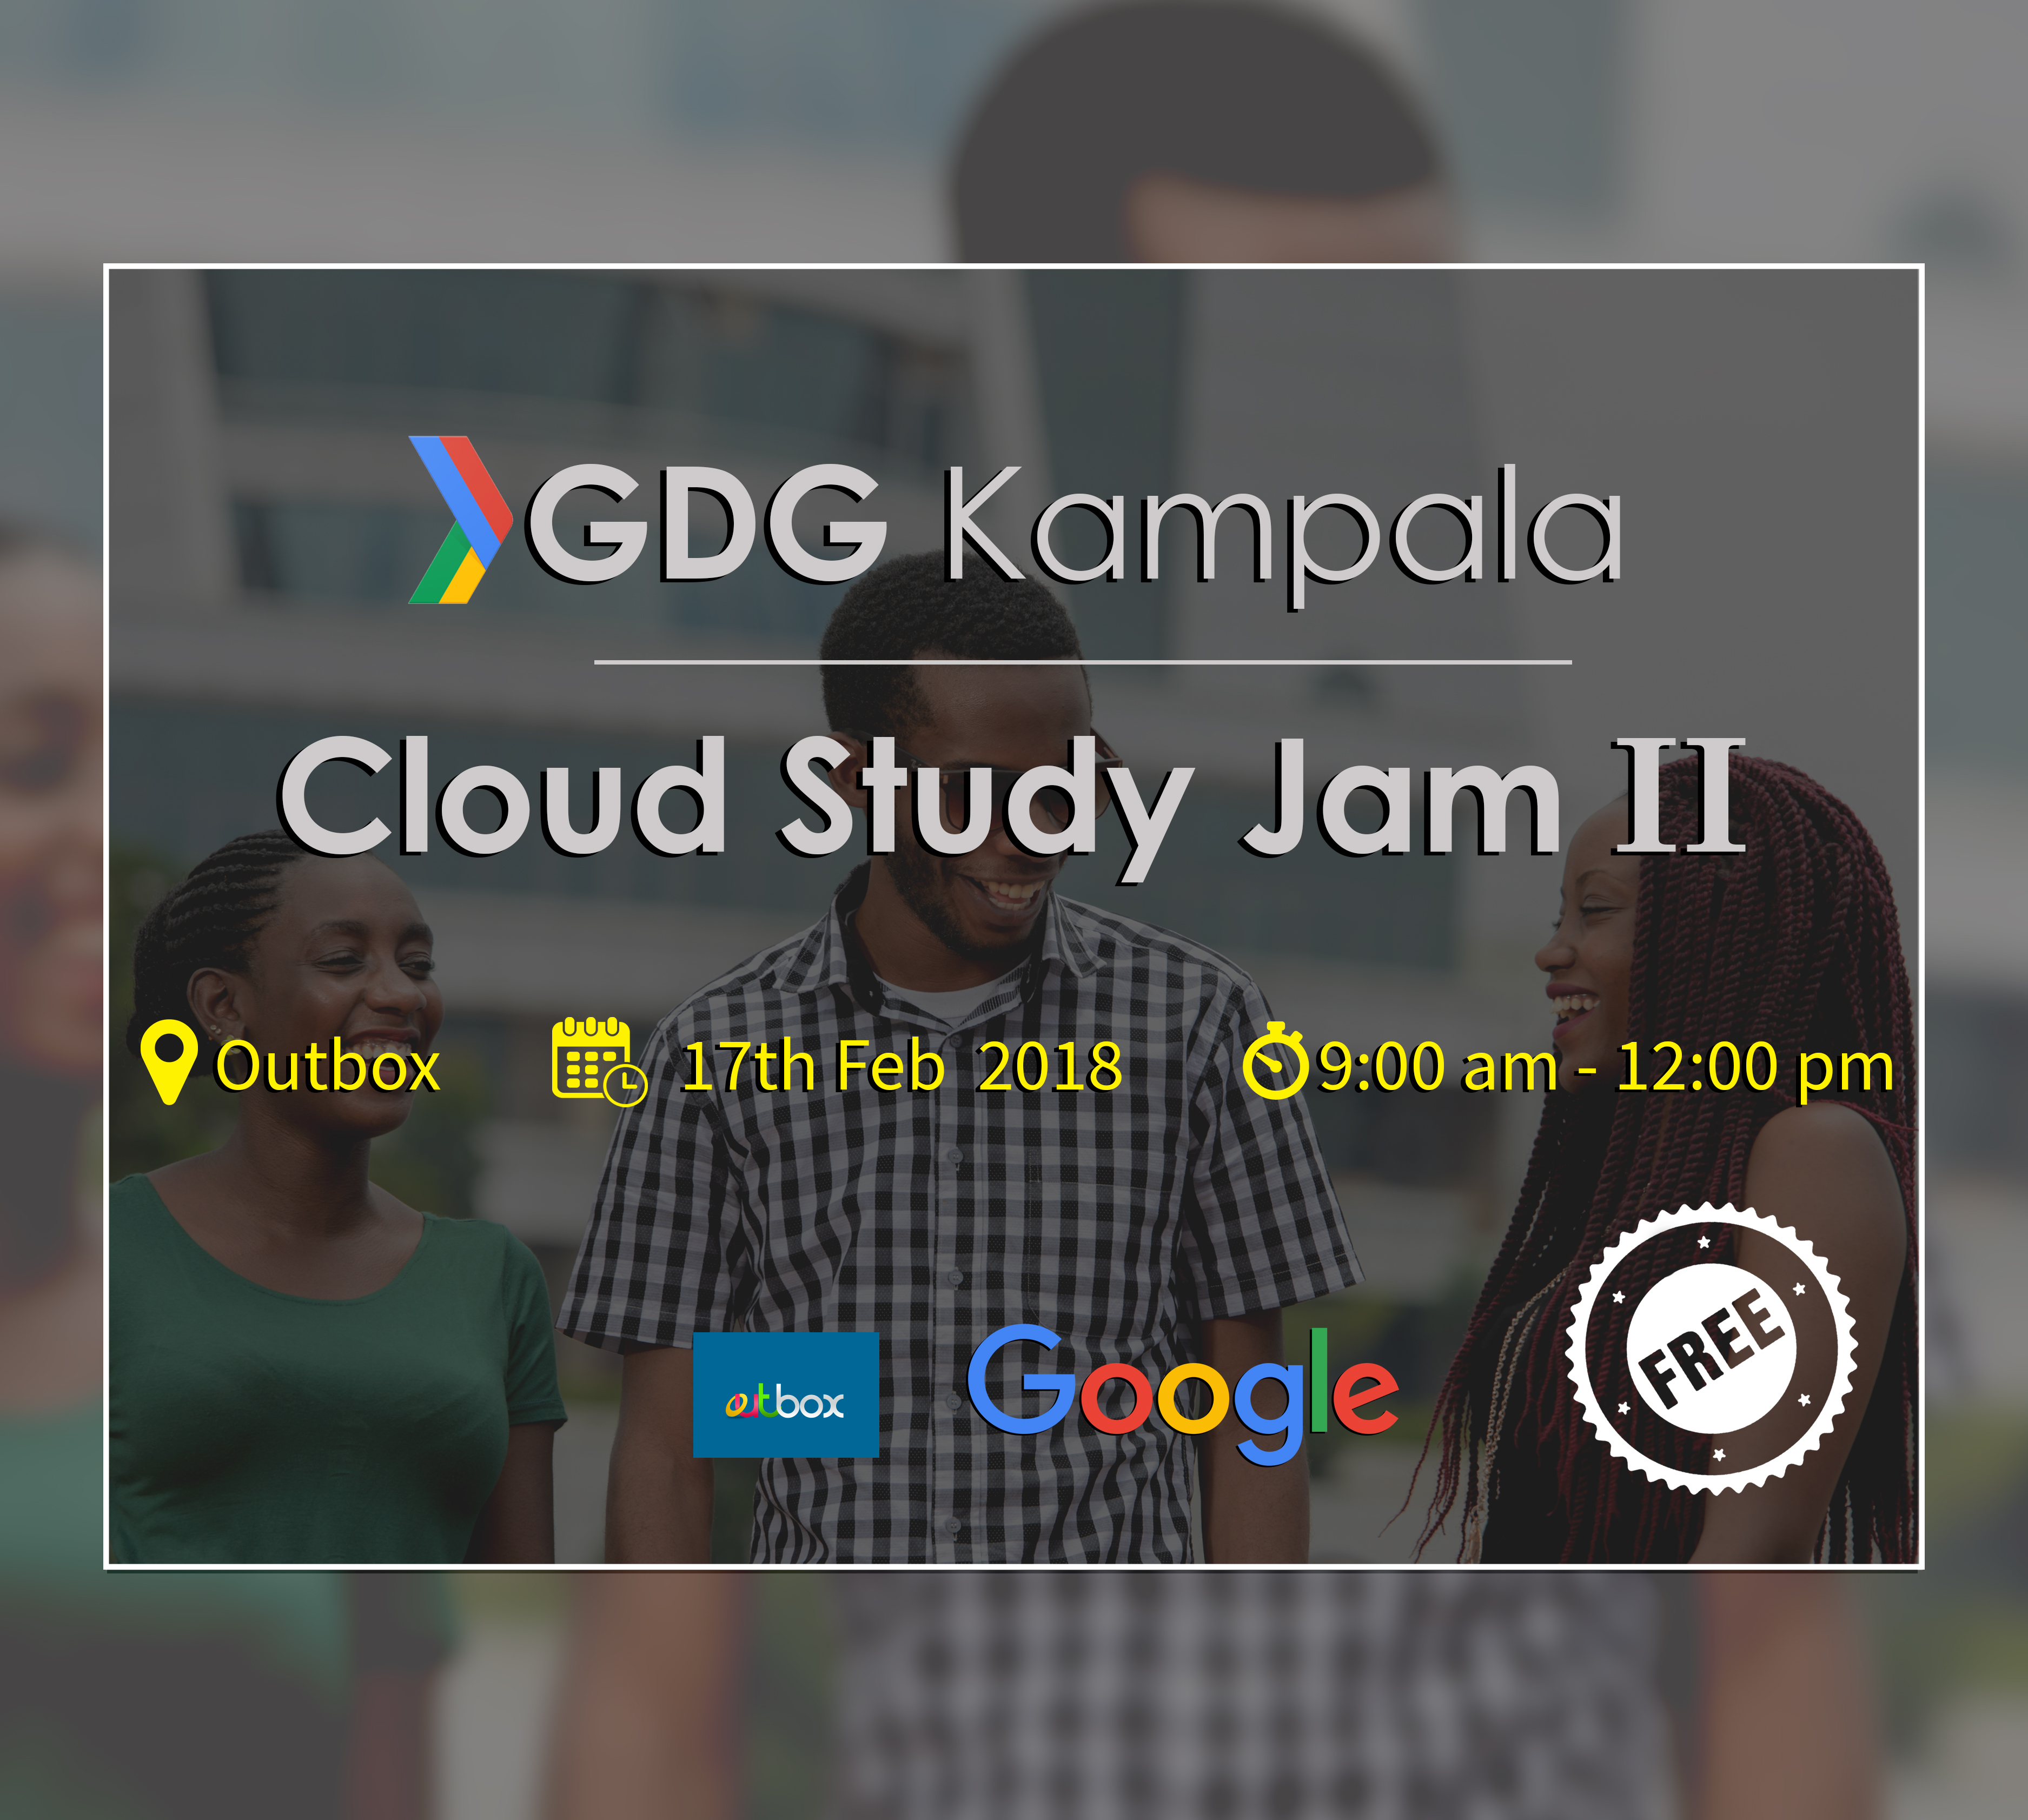 GDG Cloud Study Jam II